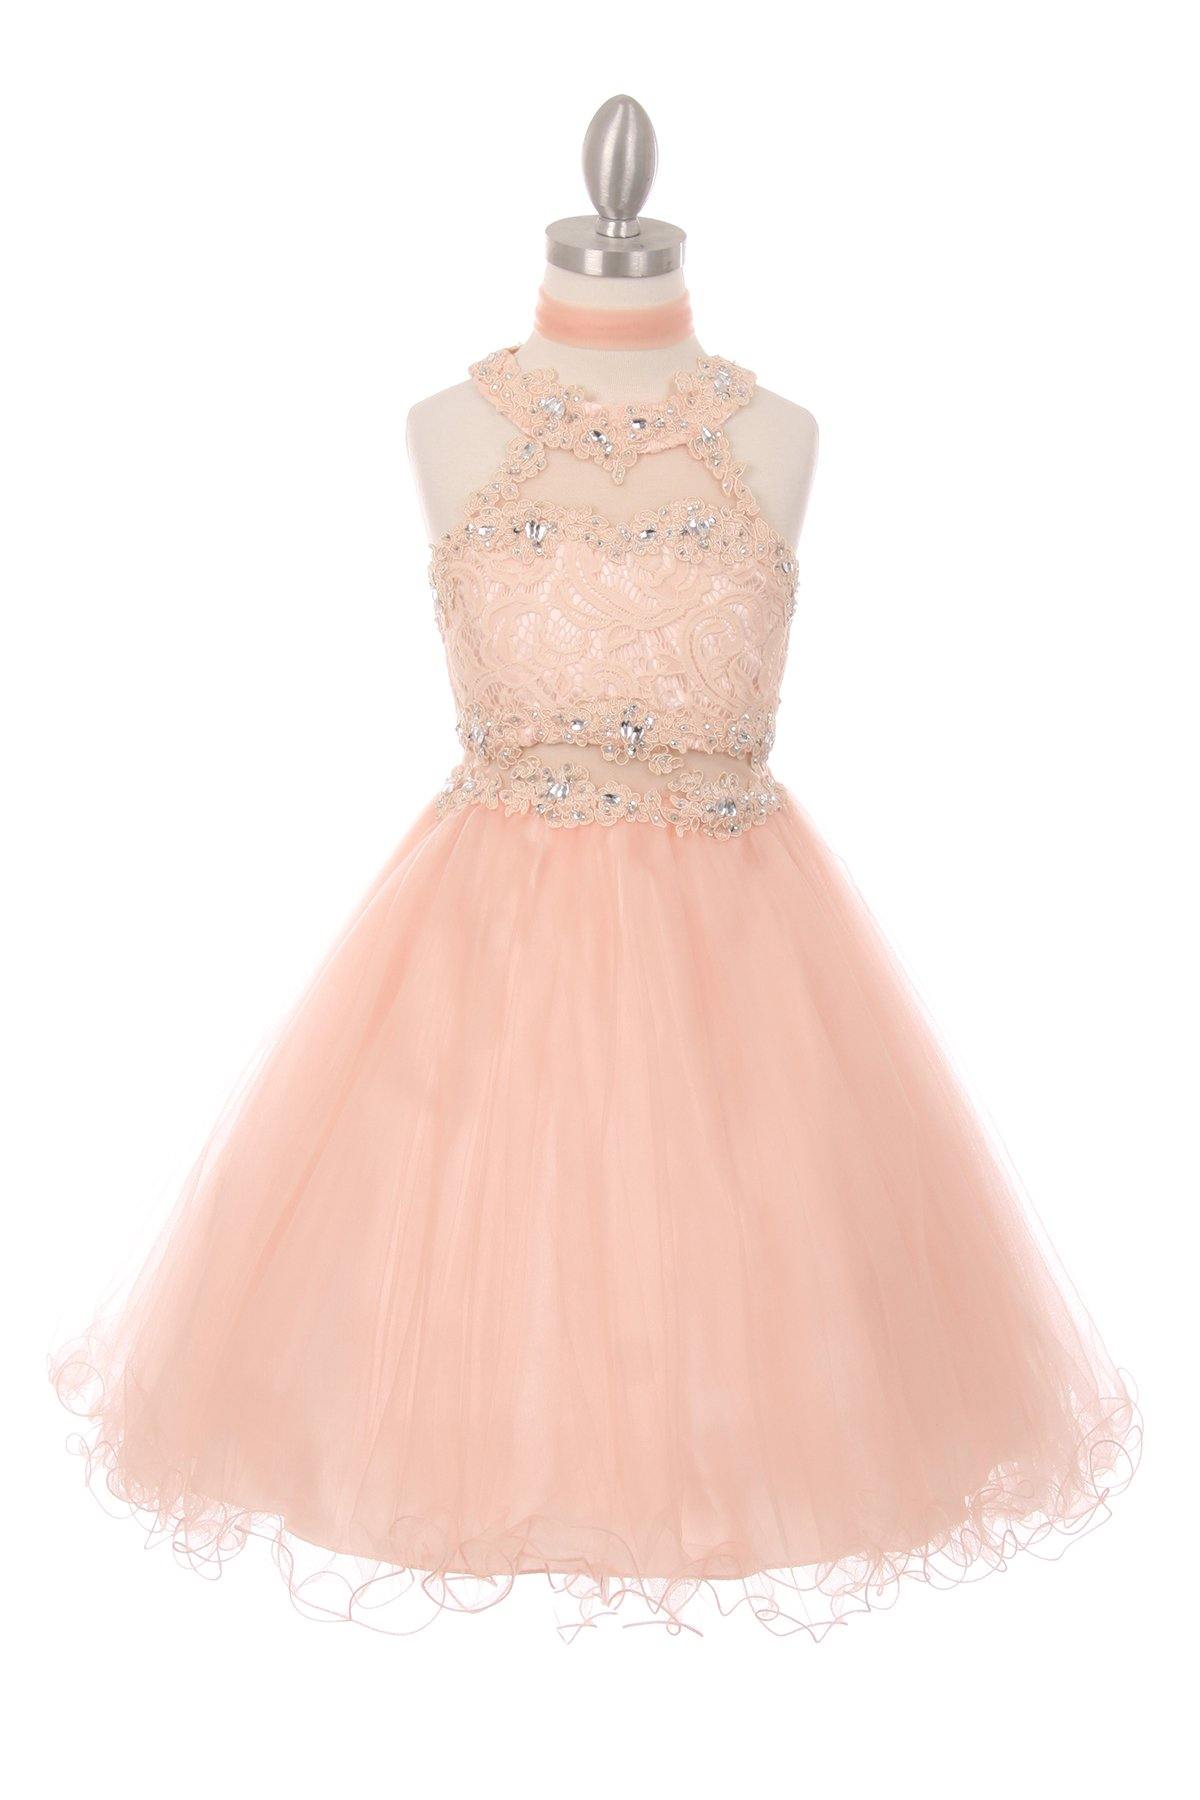 Short Beaded Dress Flower Girls - The Dress Outlet Cinderella Couture